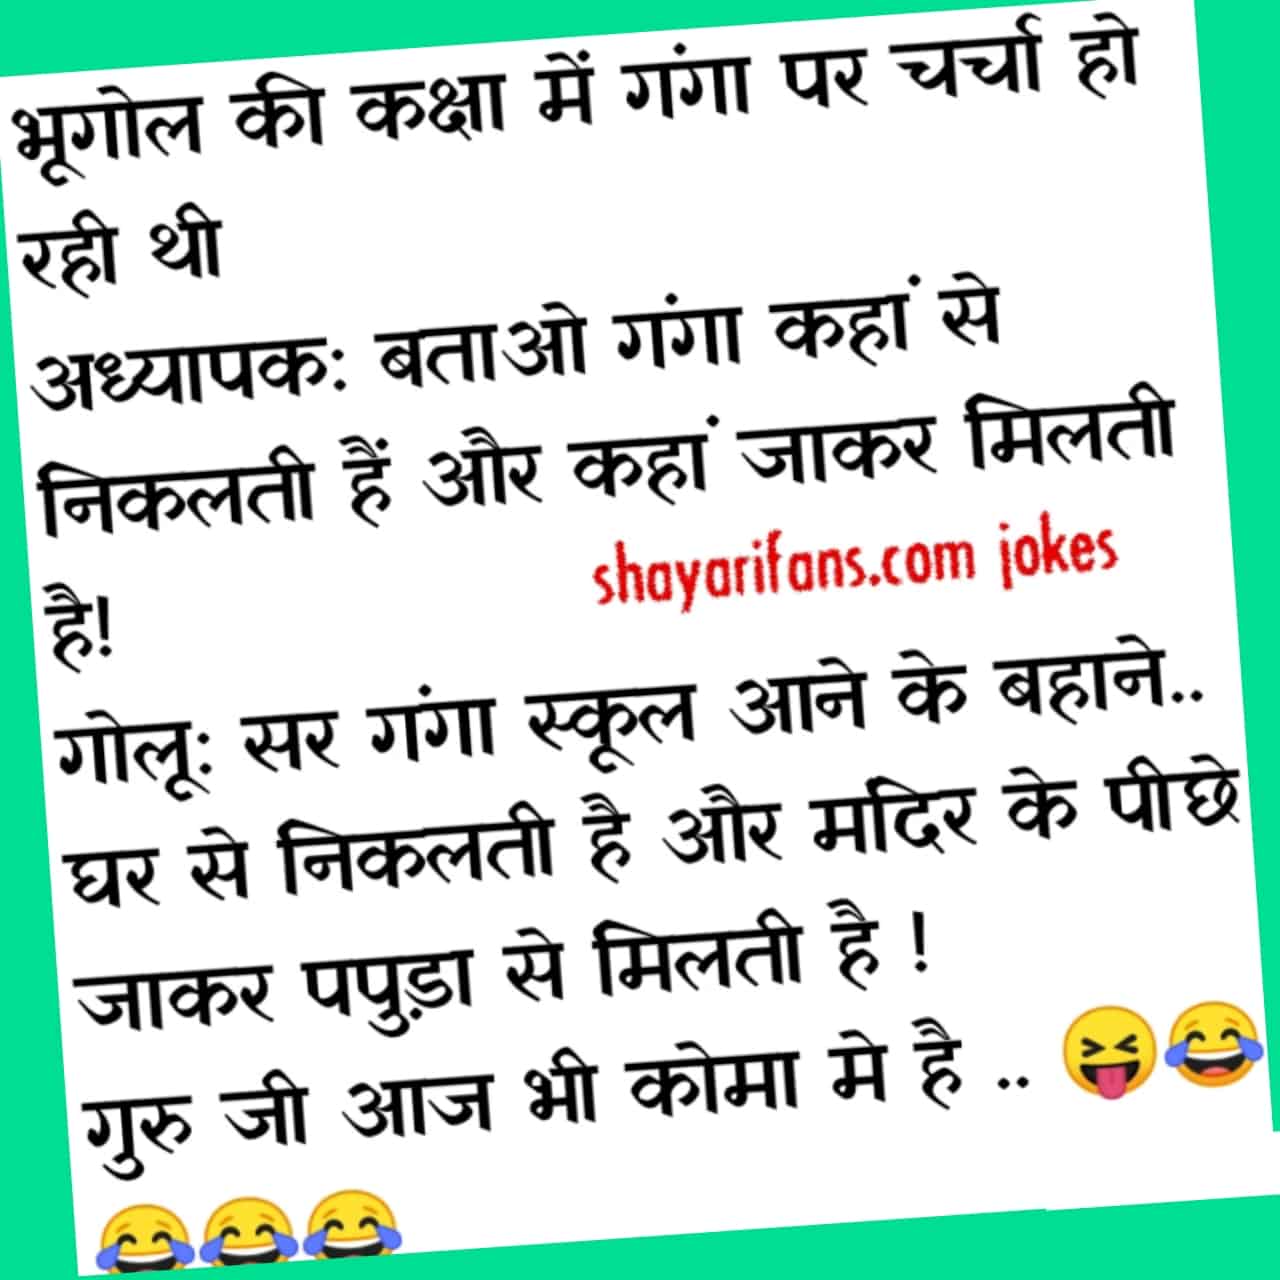 Jokes in hindi for whatsapp Part 6 | Jokes in hindi for whatsapp ...